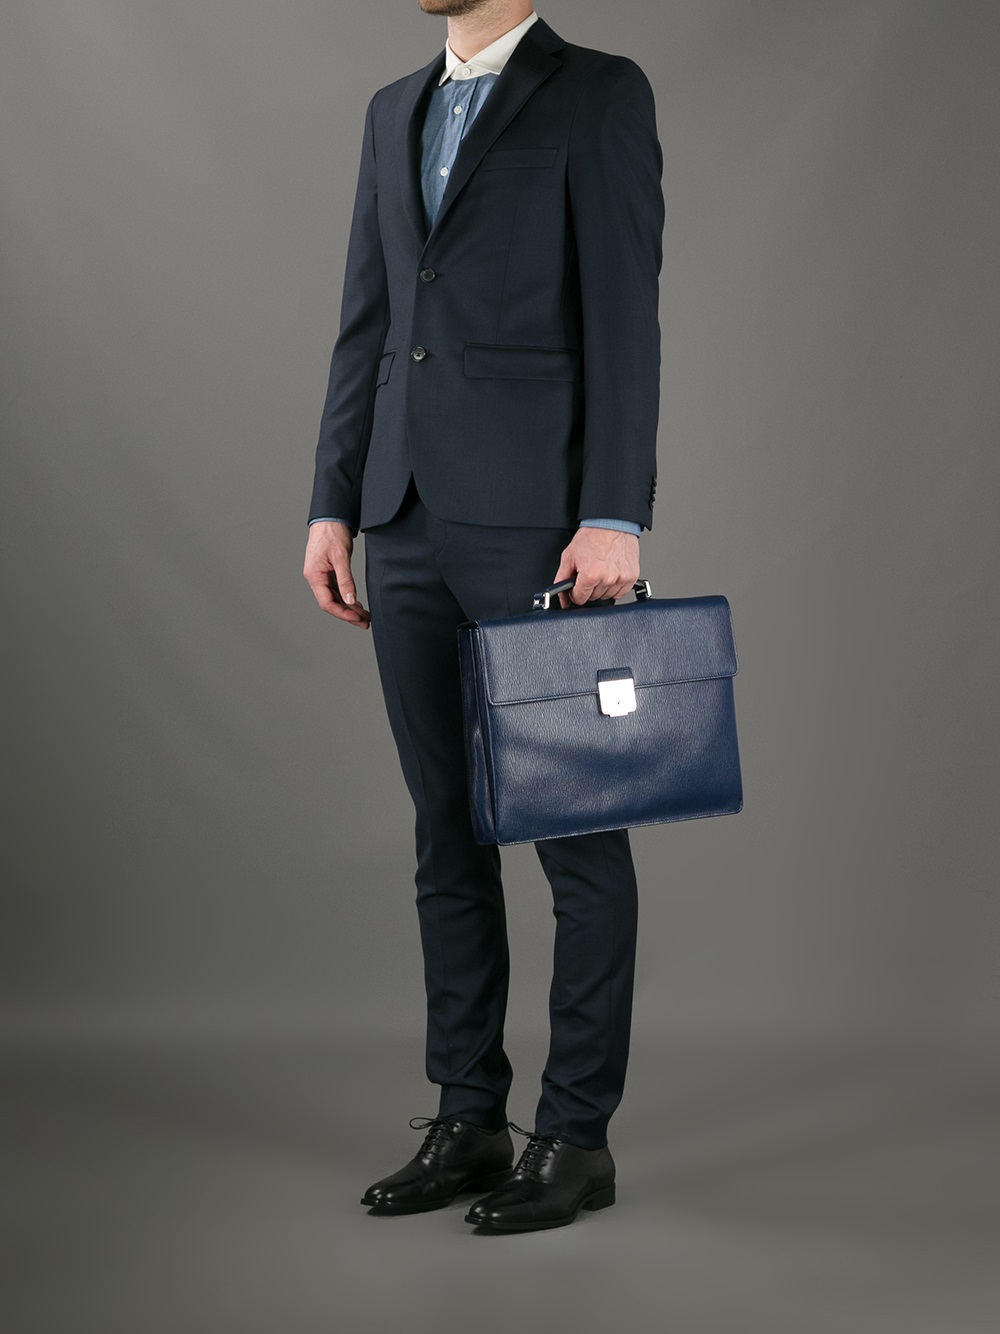 Ferragamo Revival Briefcase in Blue for Men - Lyst